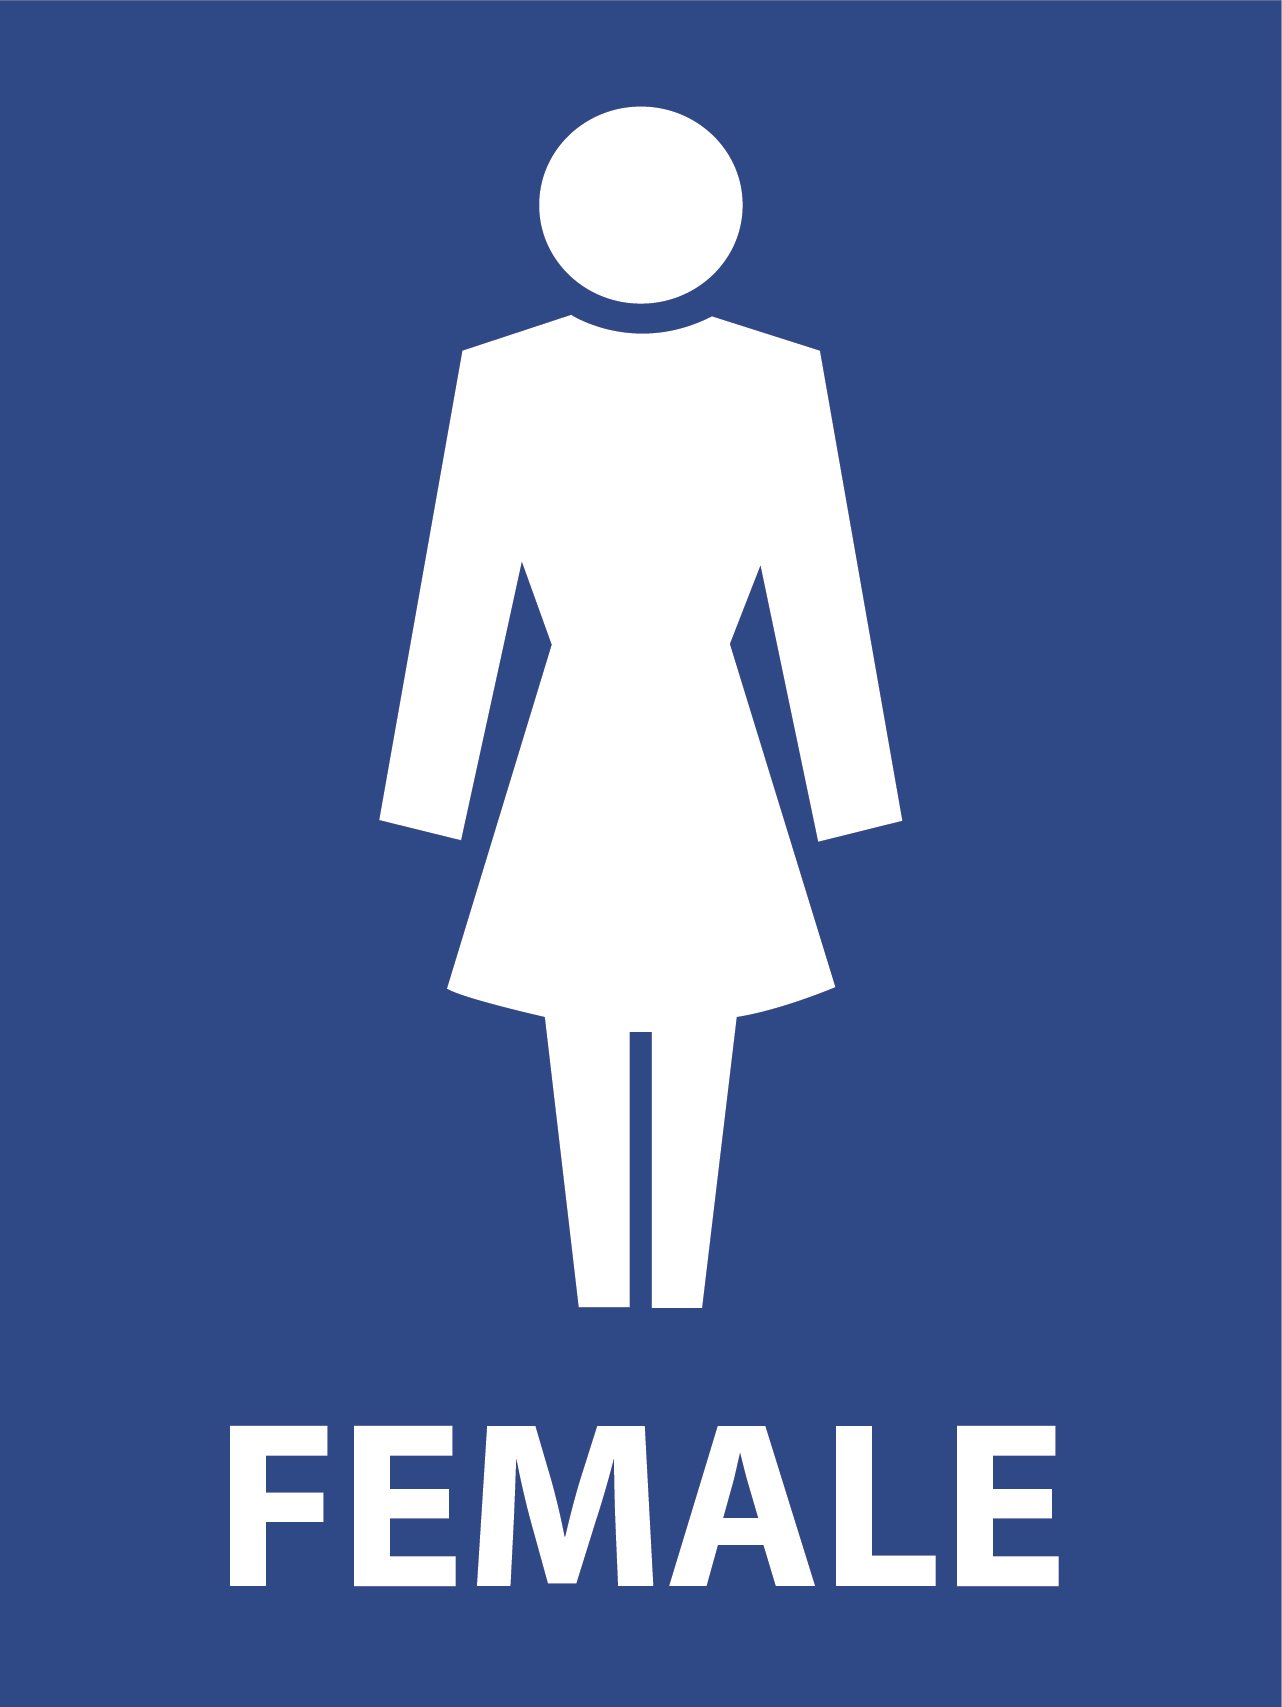 Symbolic Female Toilets - 600 x 450 - Metal